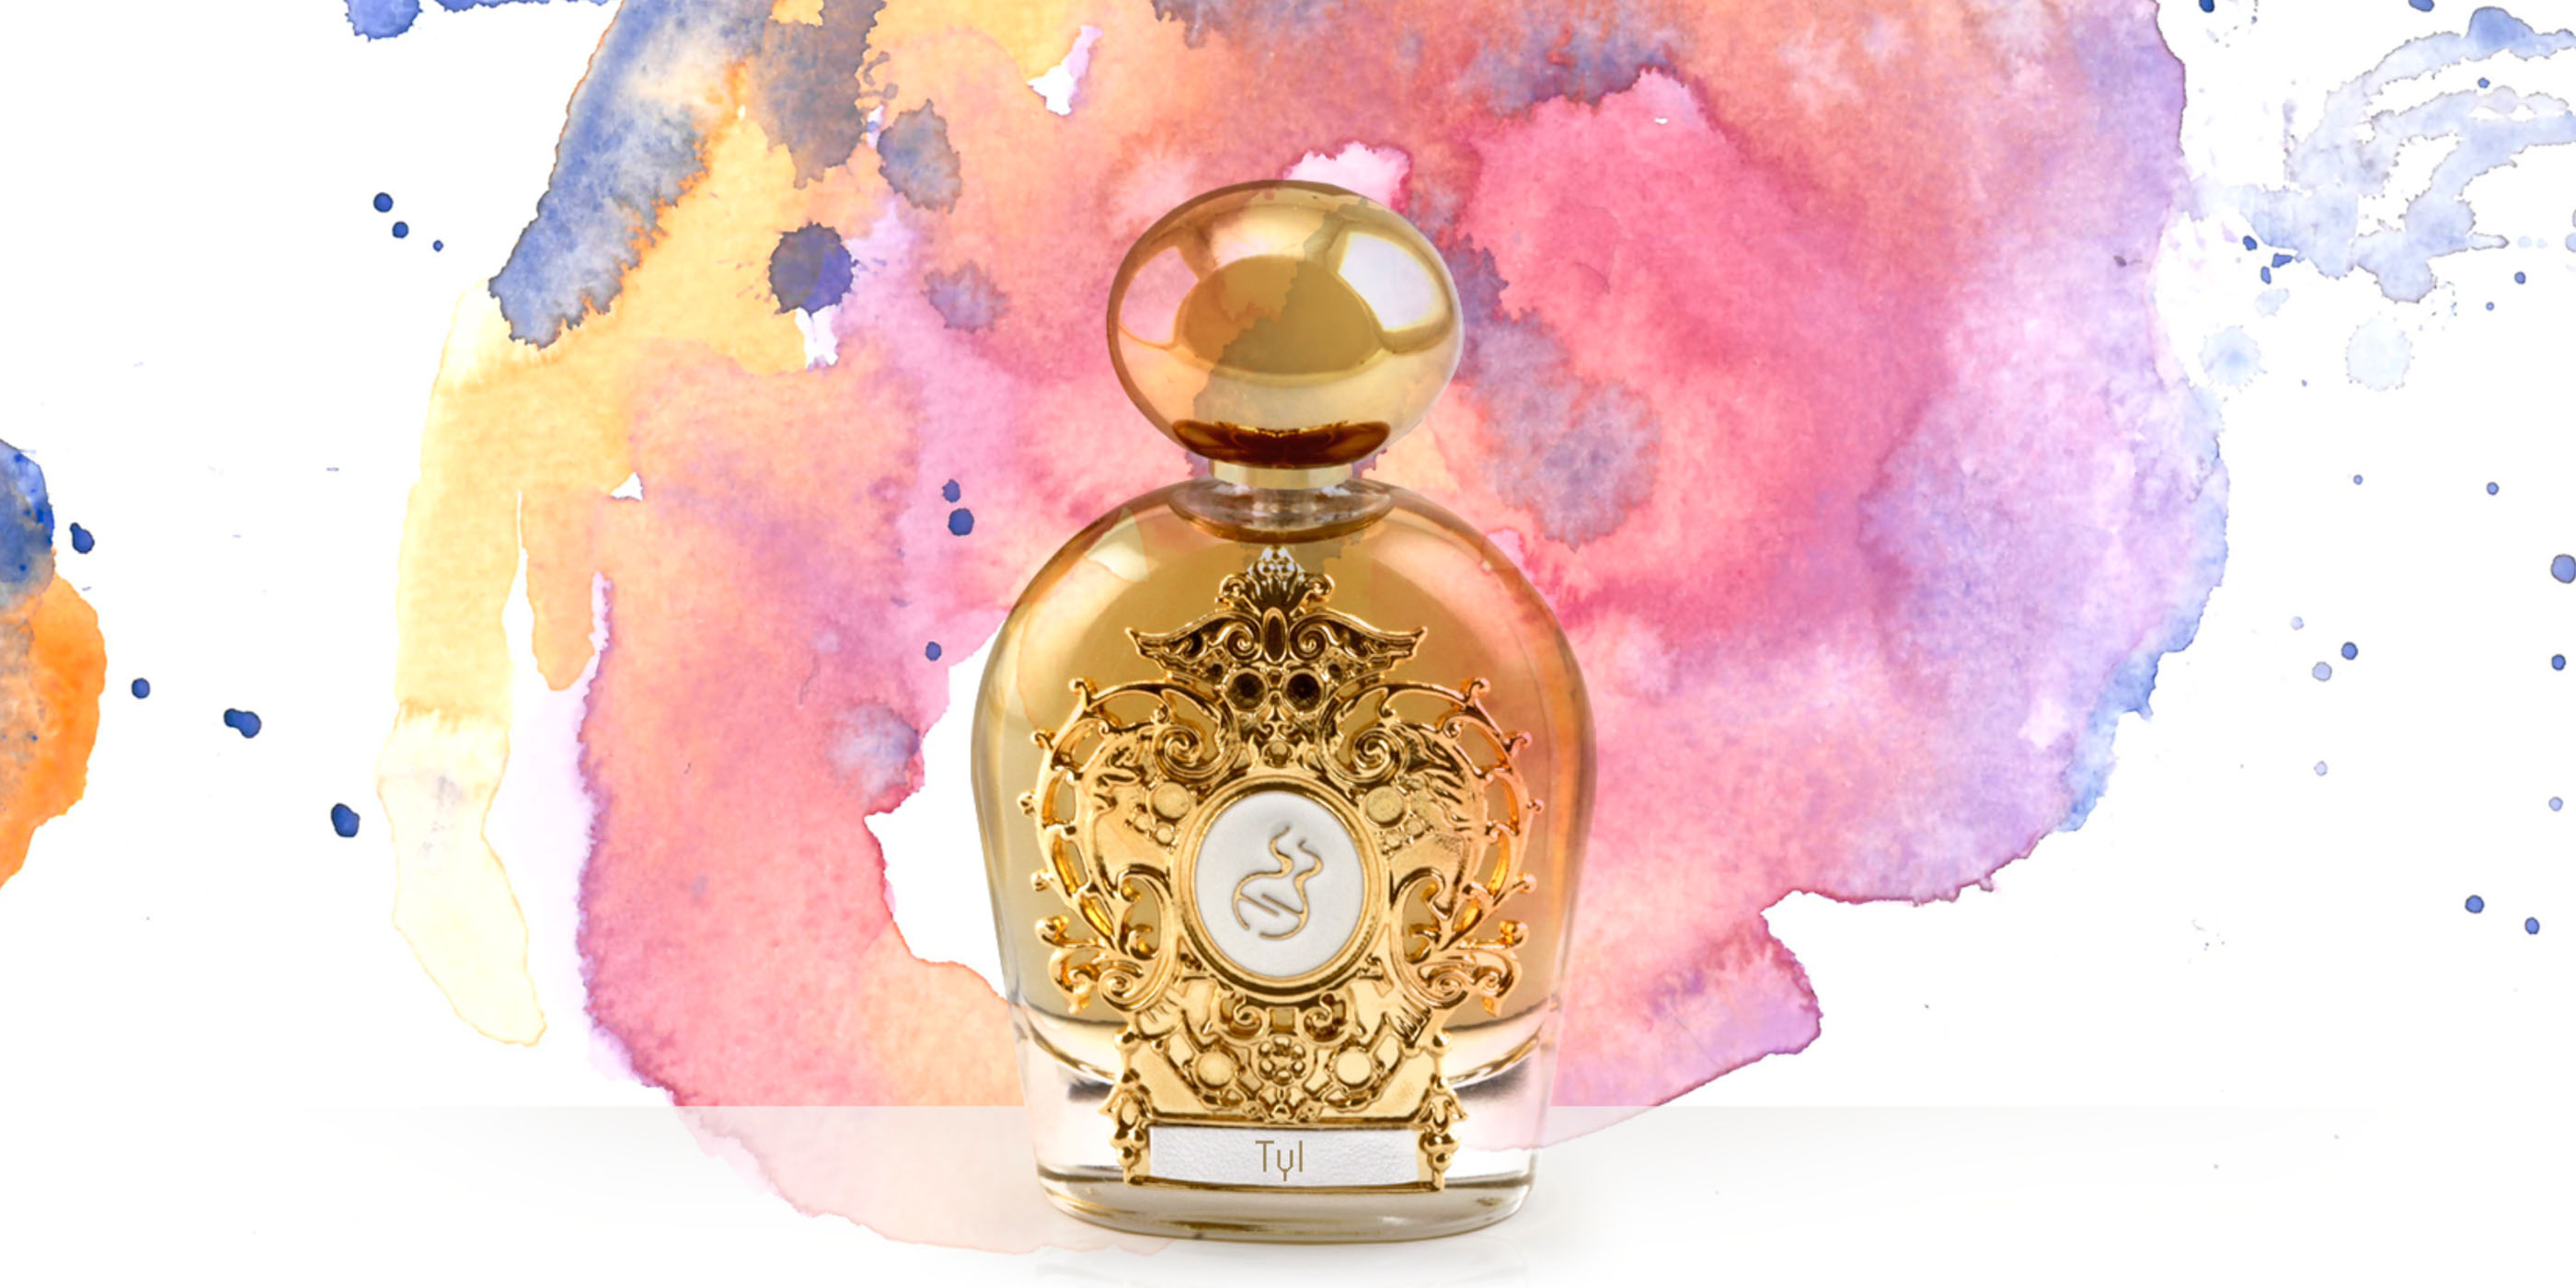 Tiziana Terenzi Tyl parfum 2017 exclusive